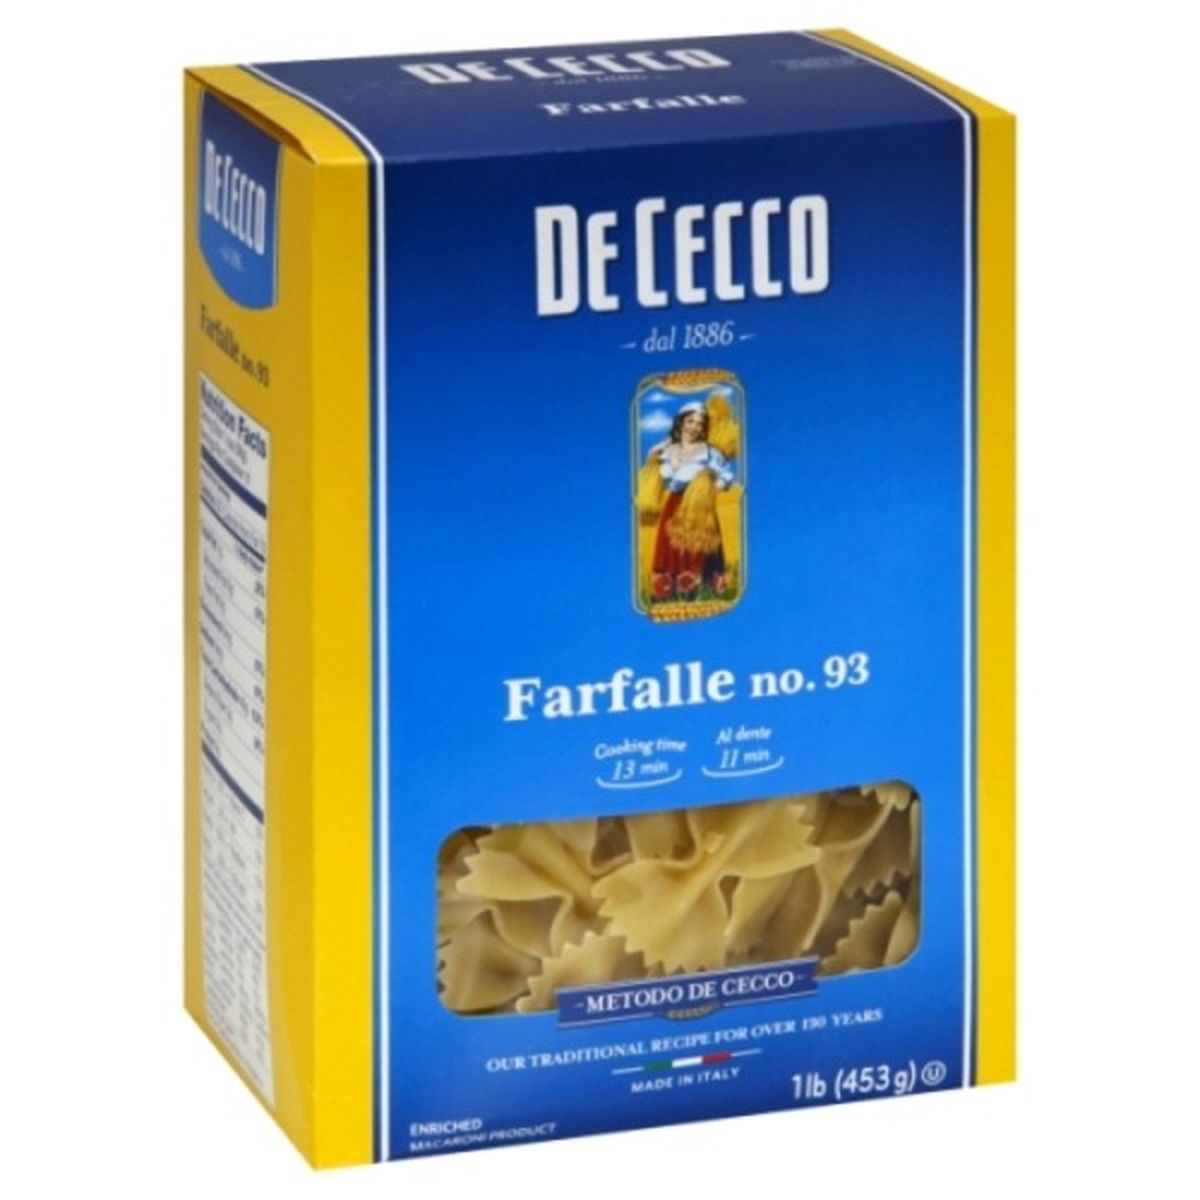 Calories in De Cecco Farfalle, No. 93